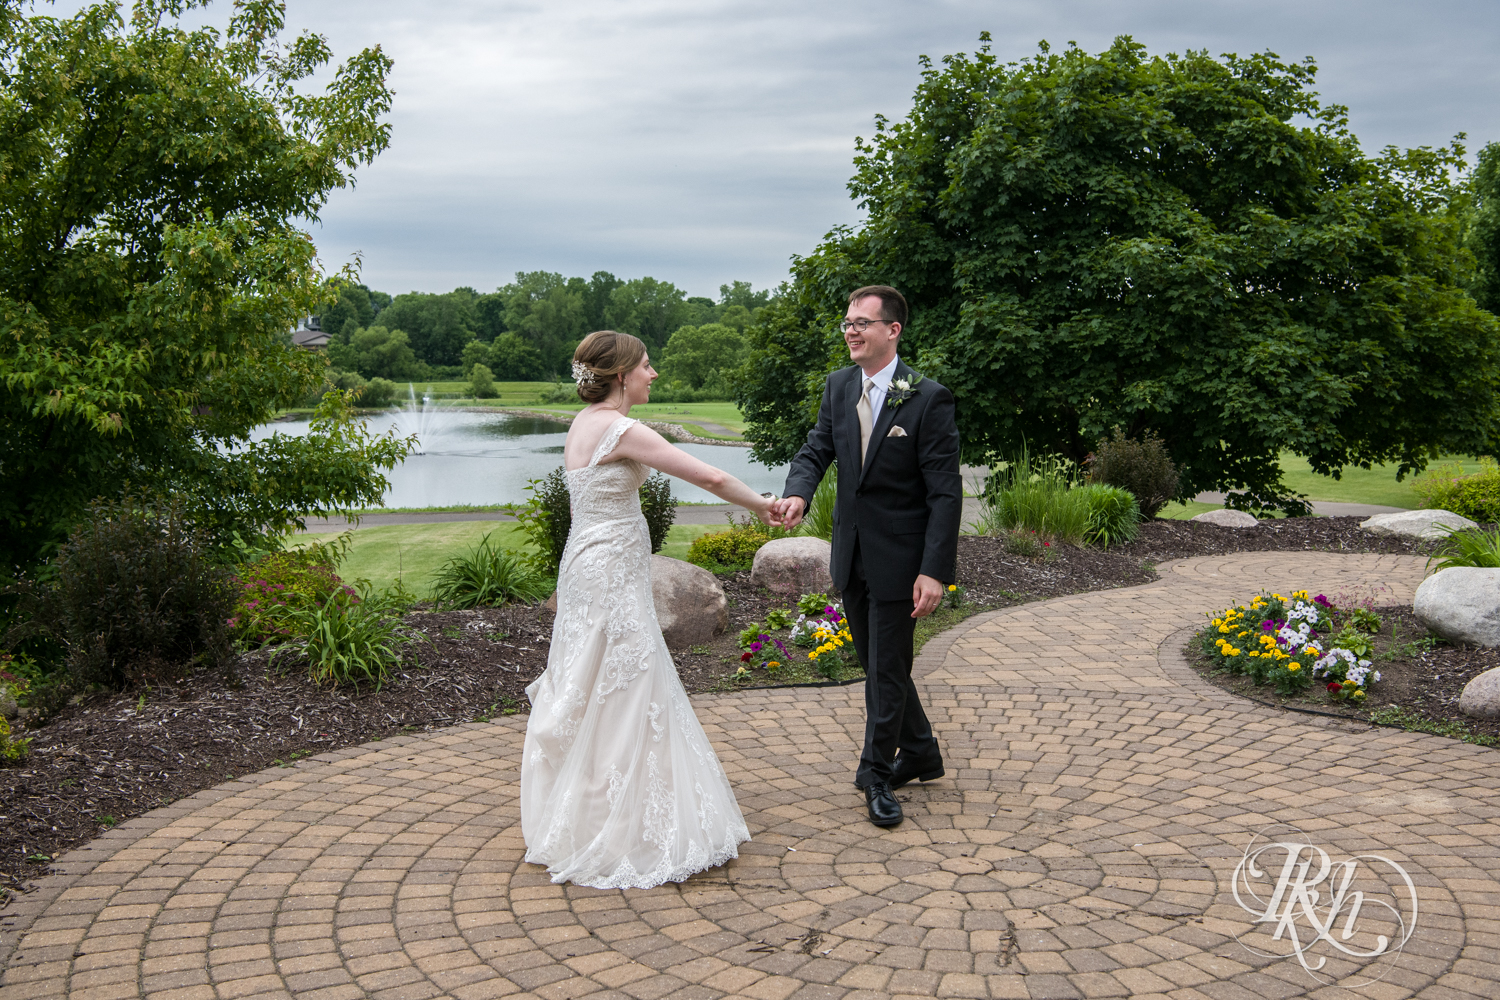 Bride and groom dance after wedding ceremony at Oak Glen Golf Course in Stillwater, Minnesota.